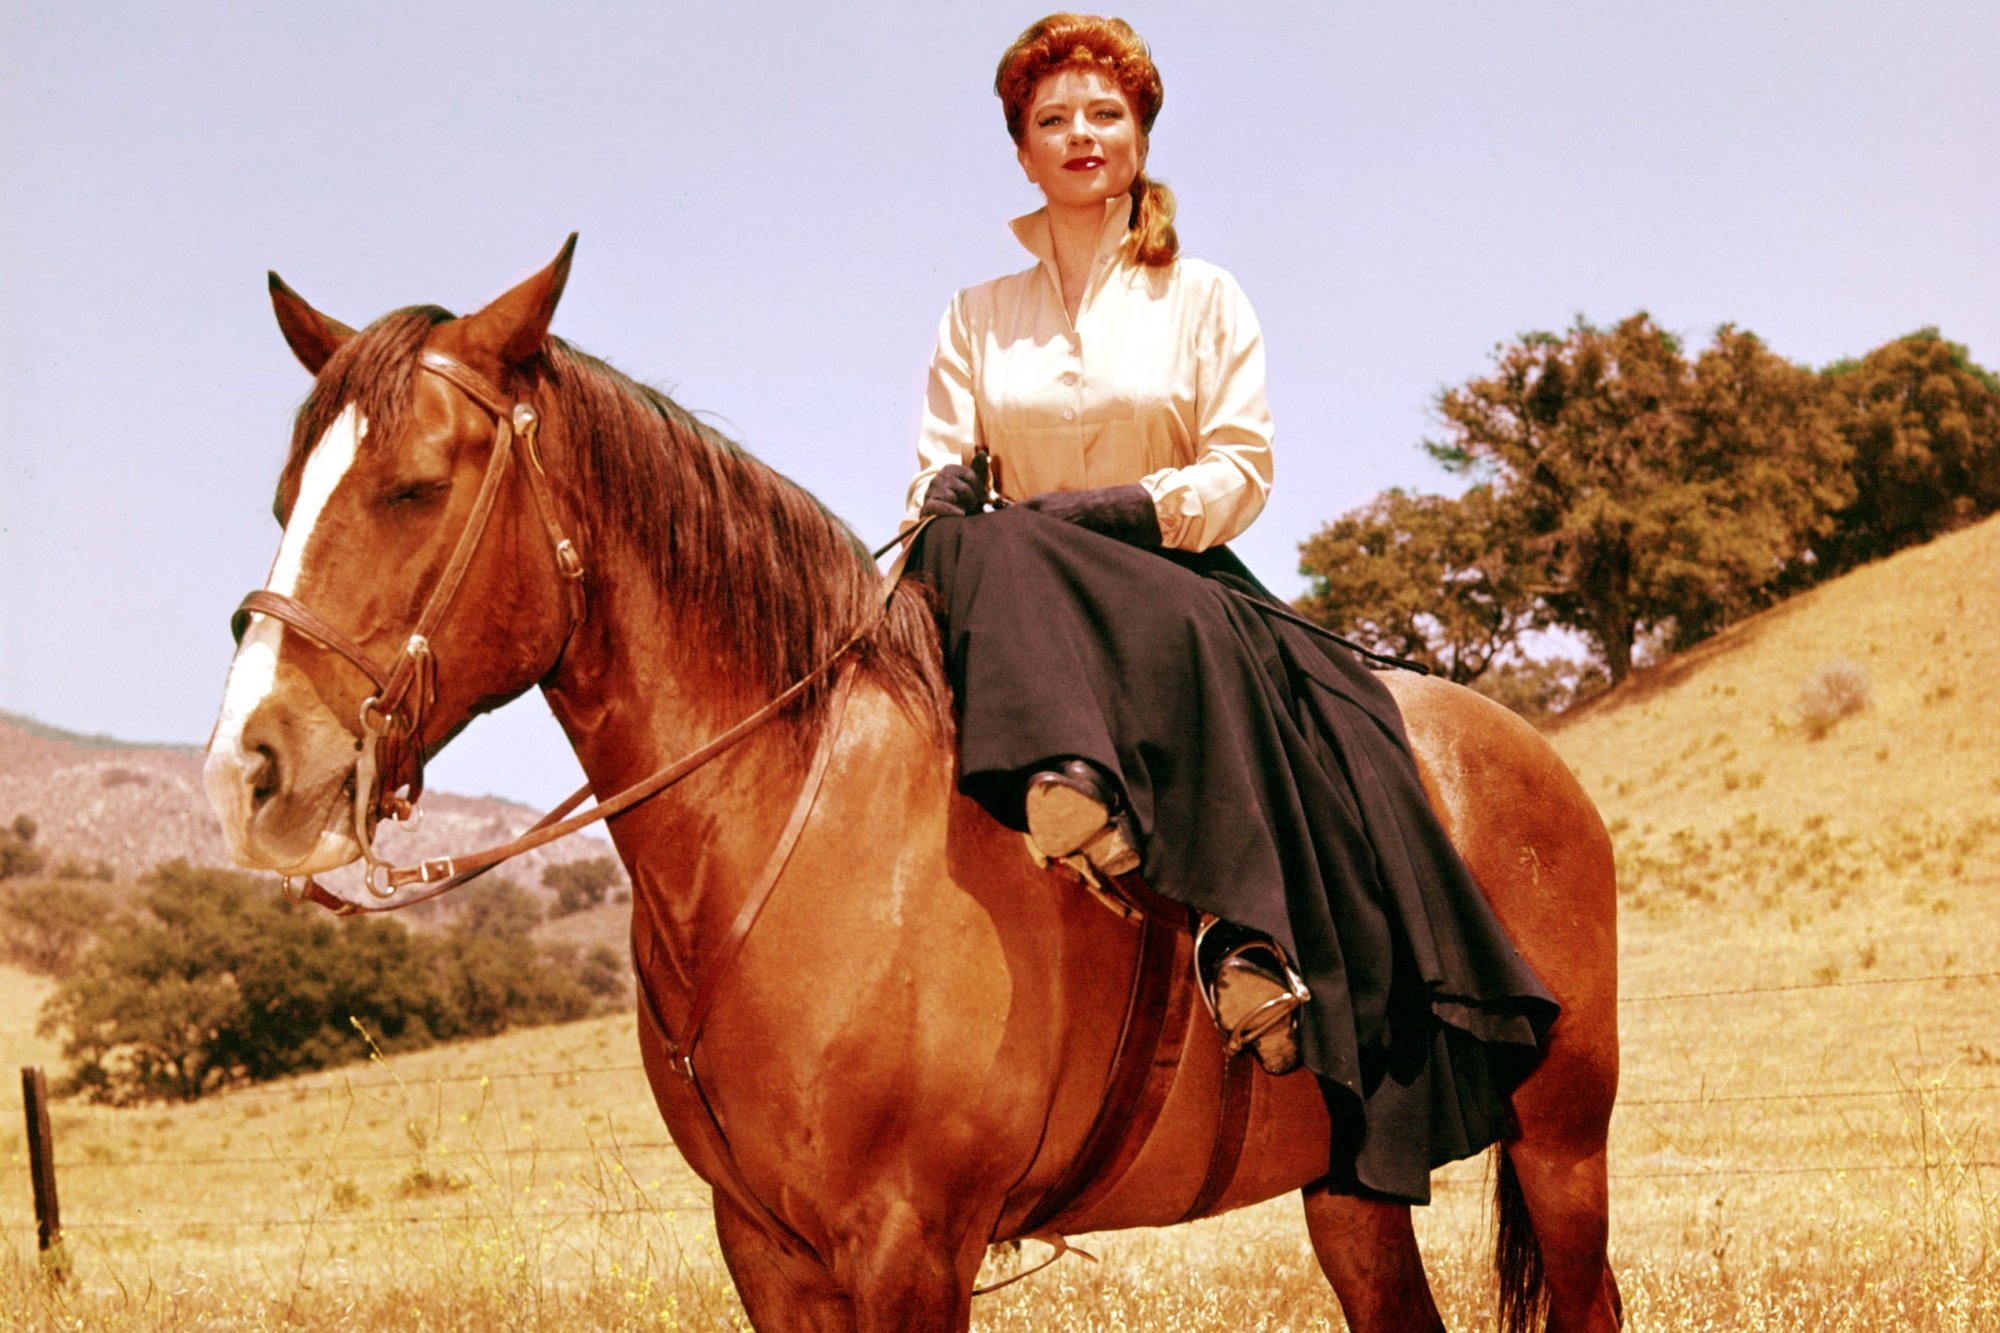 'Gunsmoke' Amanda Blake as Kitty Russell wearing a white top and black skirt side-saddled on a brown horse